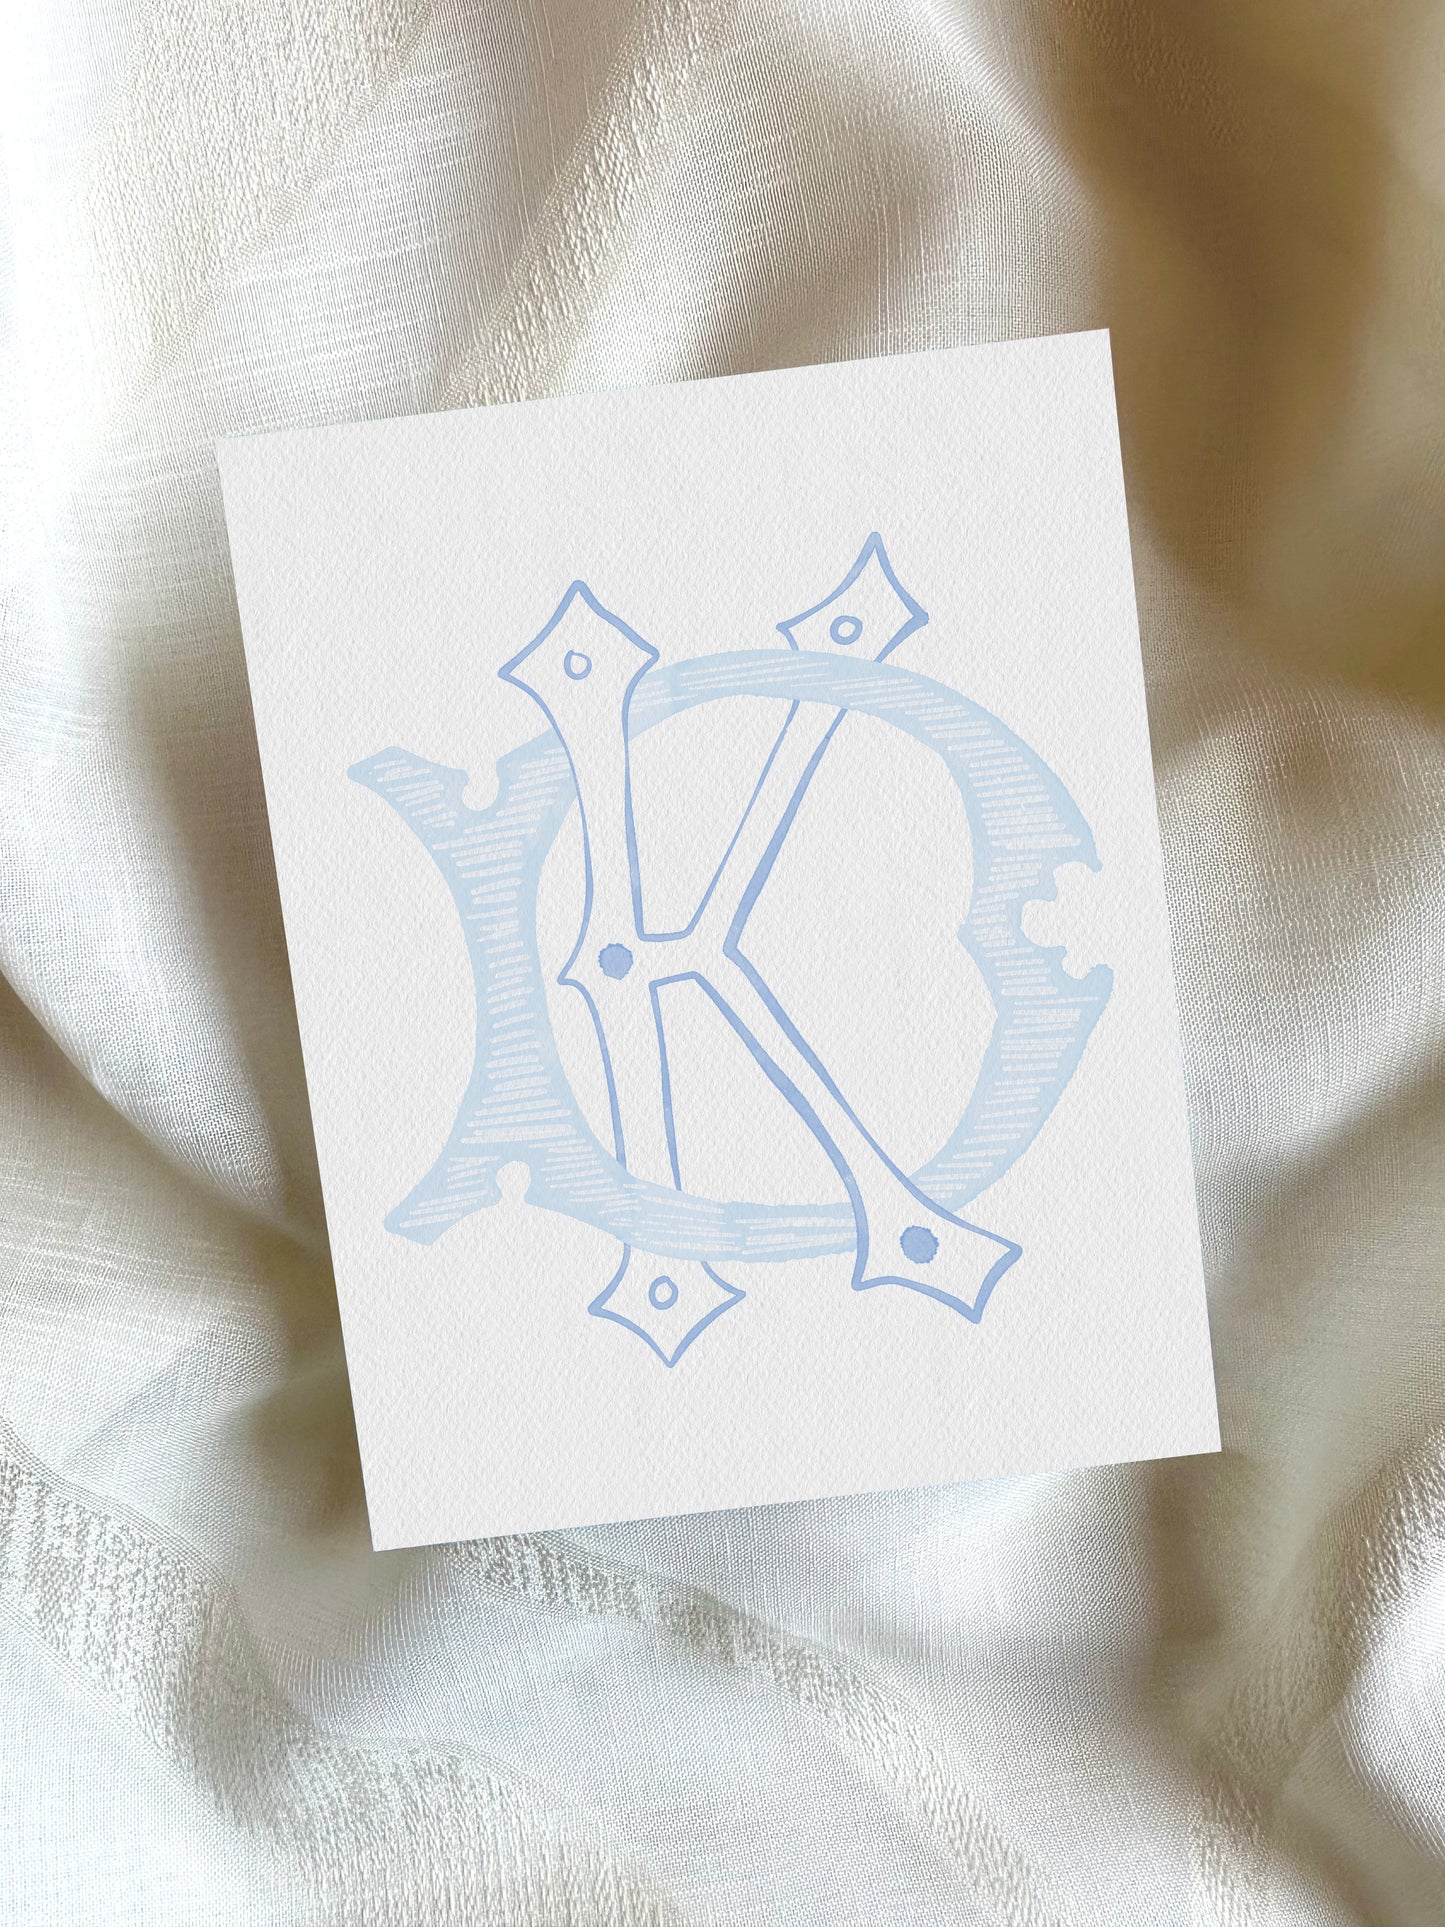 2 Letter Monogram with Letters DK | Digital Download - Wedding Monogram SVG, Personal Logo, Wedding Logo for Wedding Invitations The Wedding Crest Lab